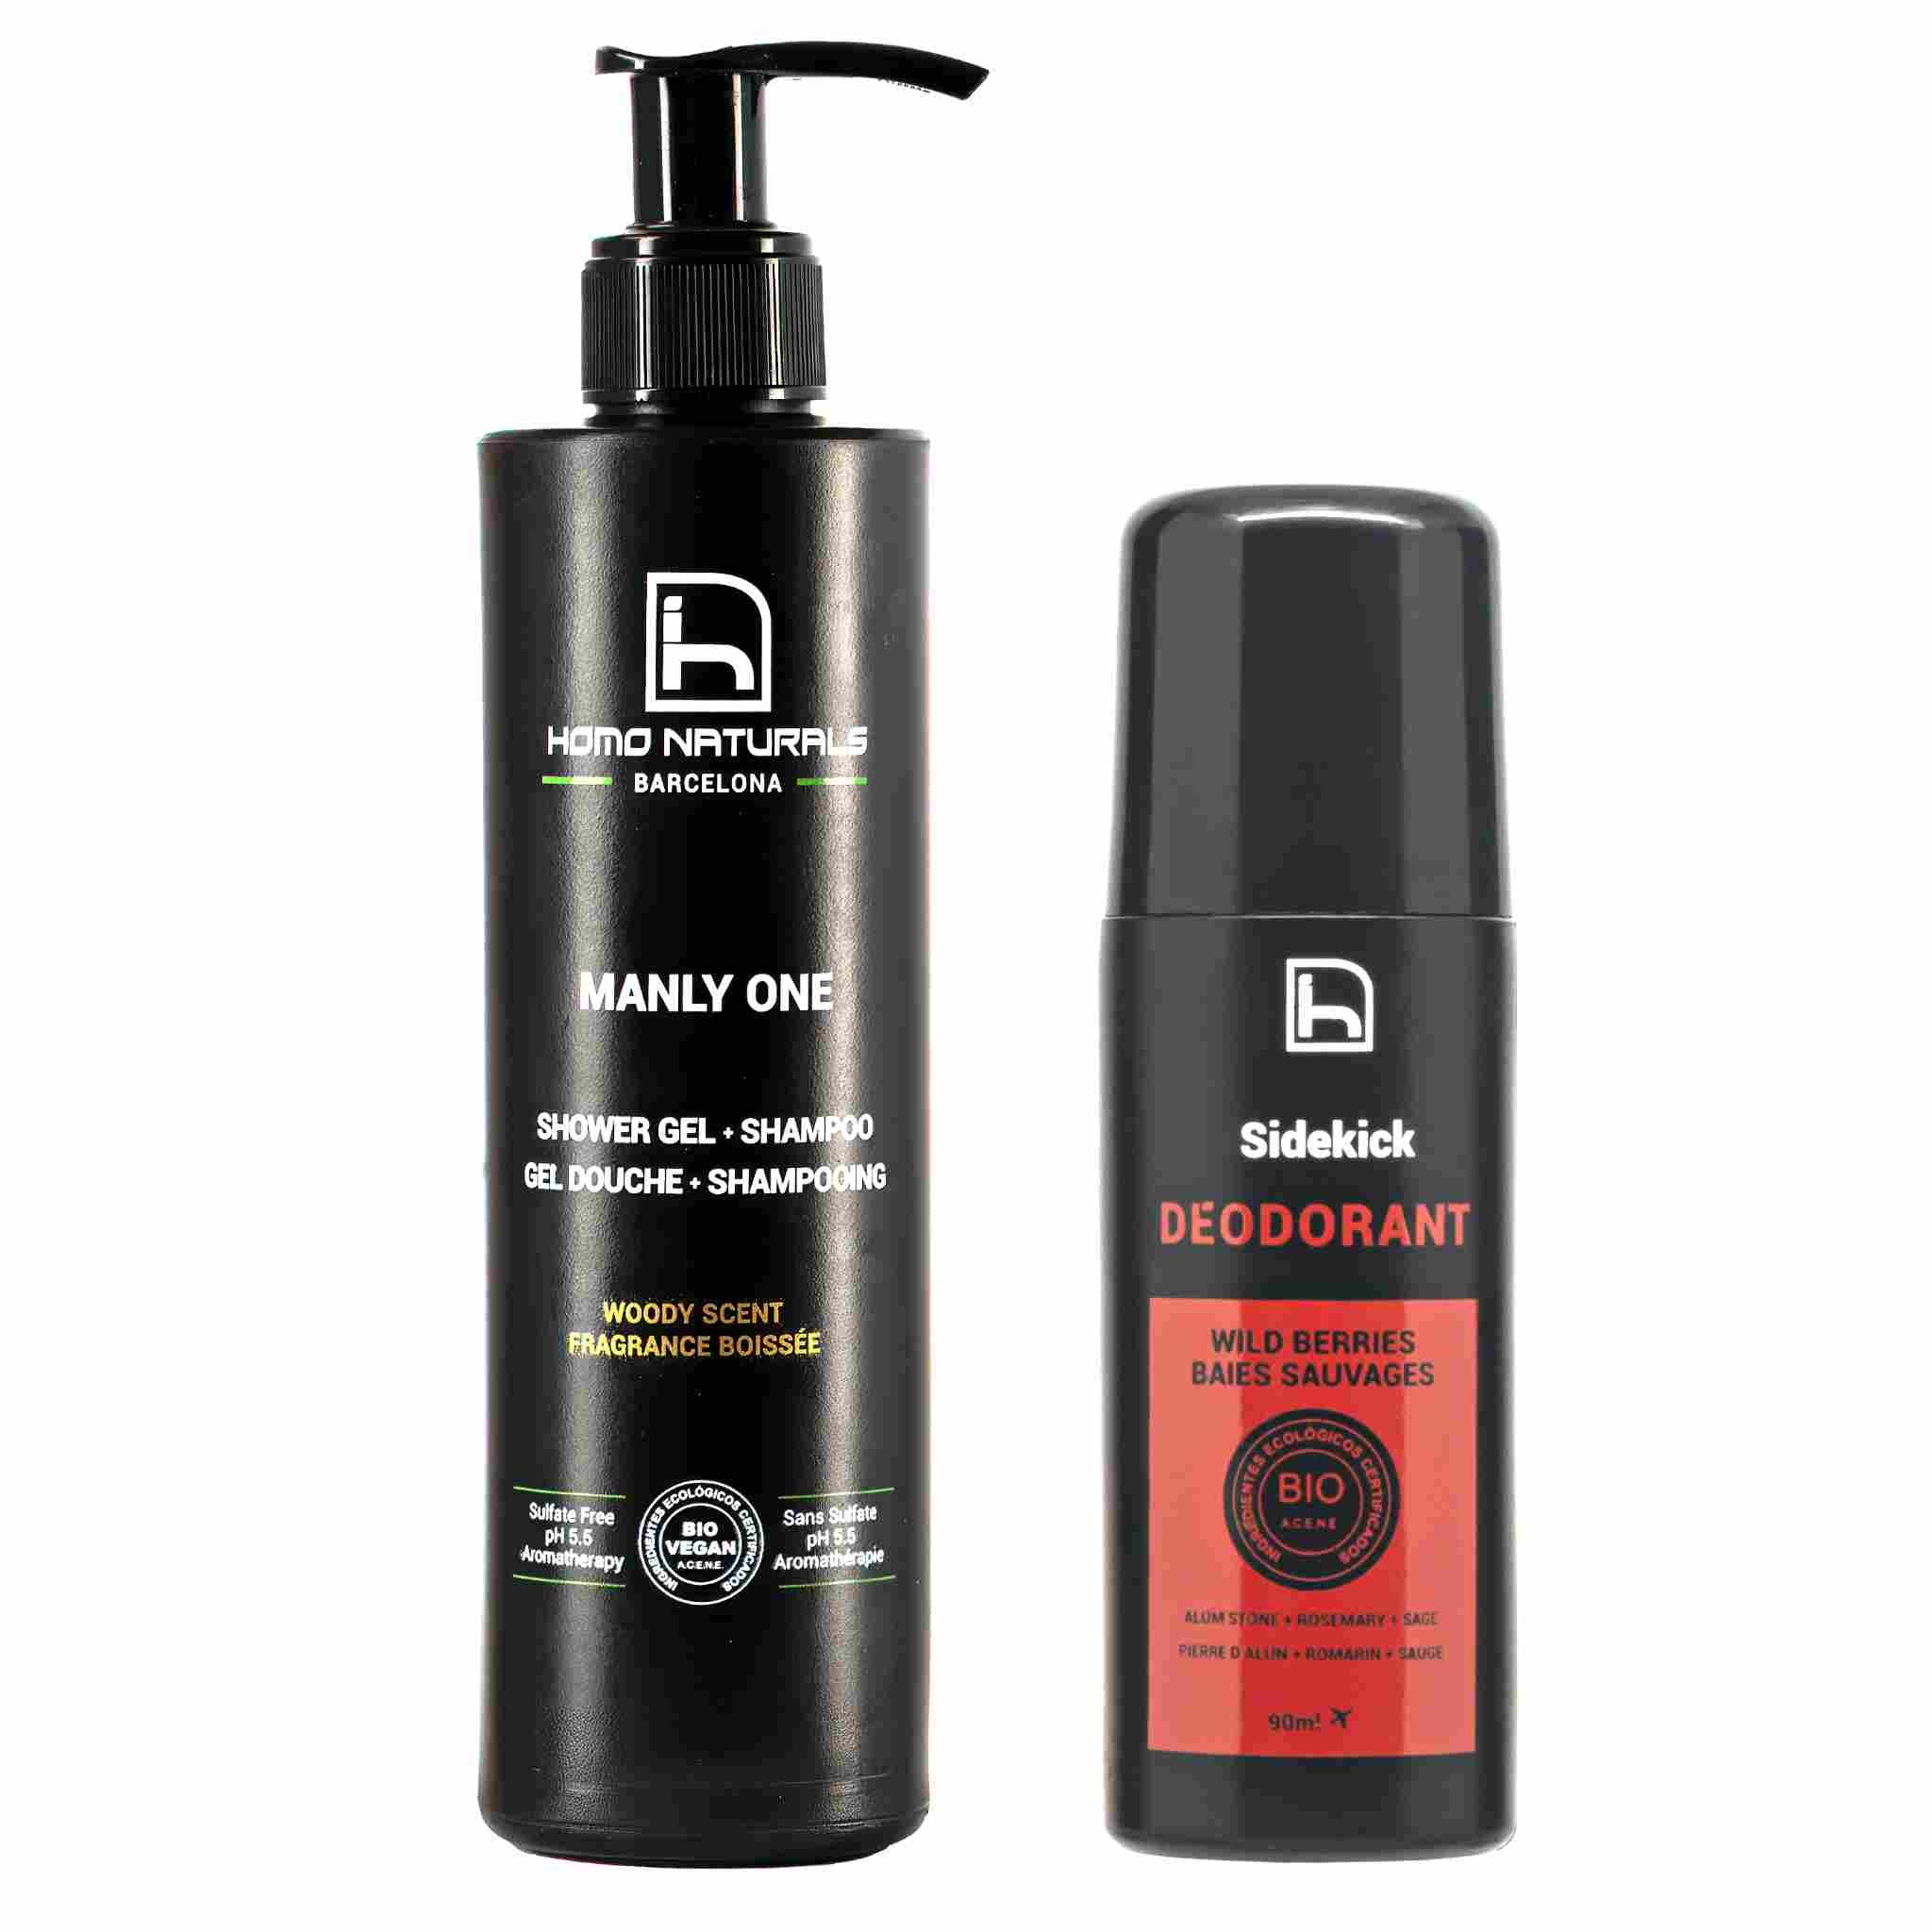 Bio deodorant for men and shower gel